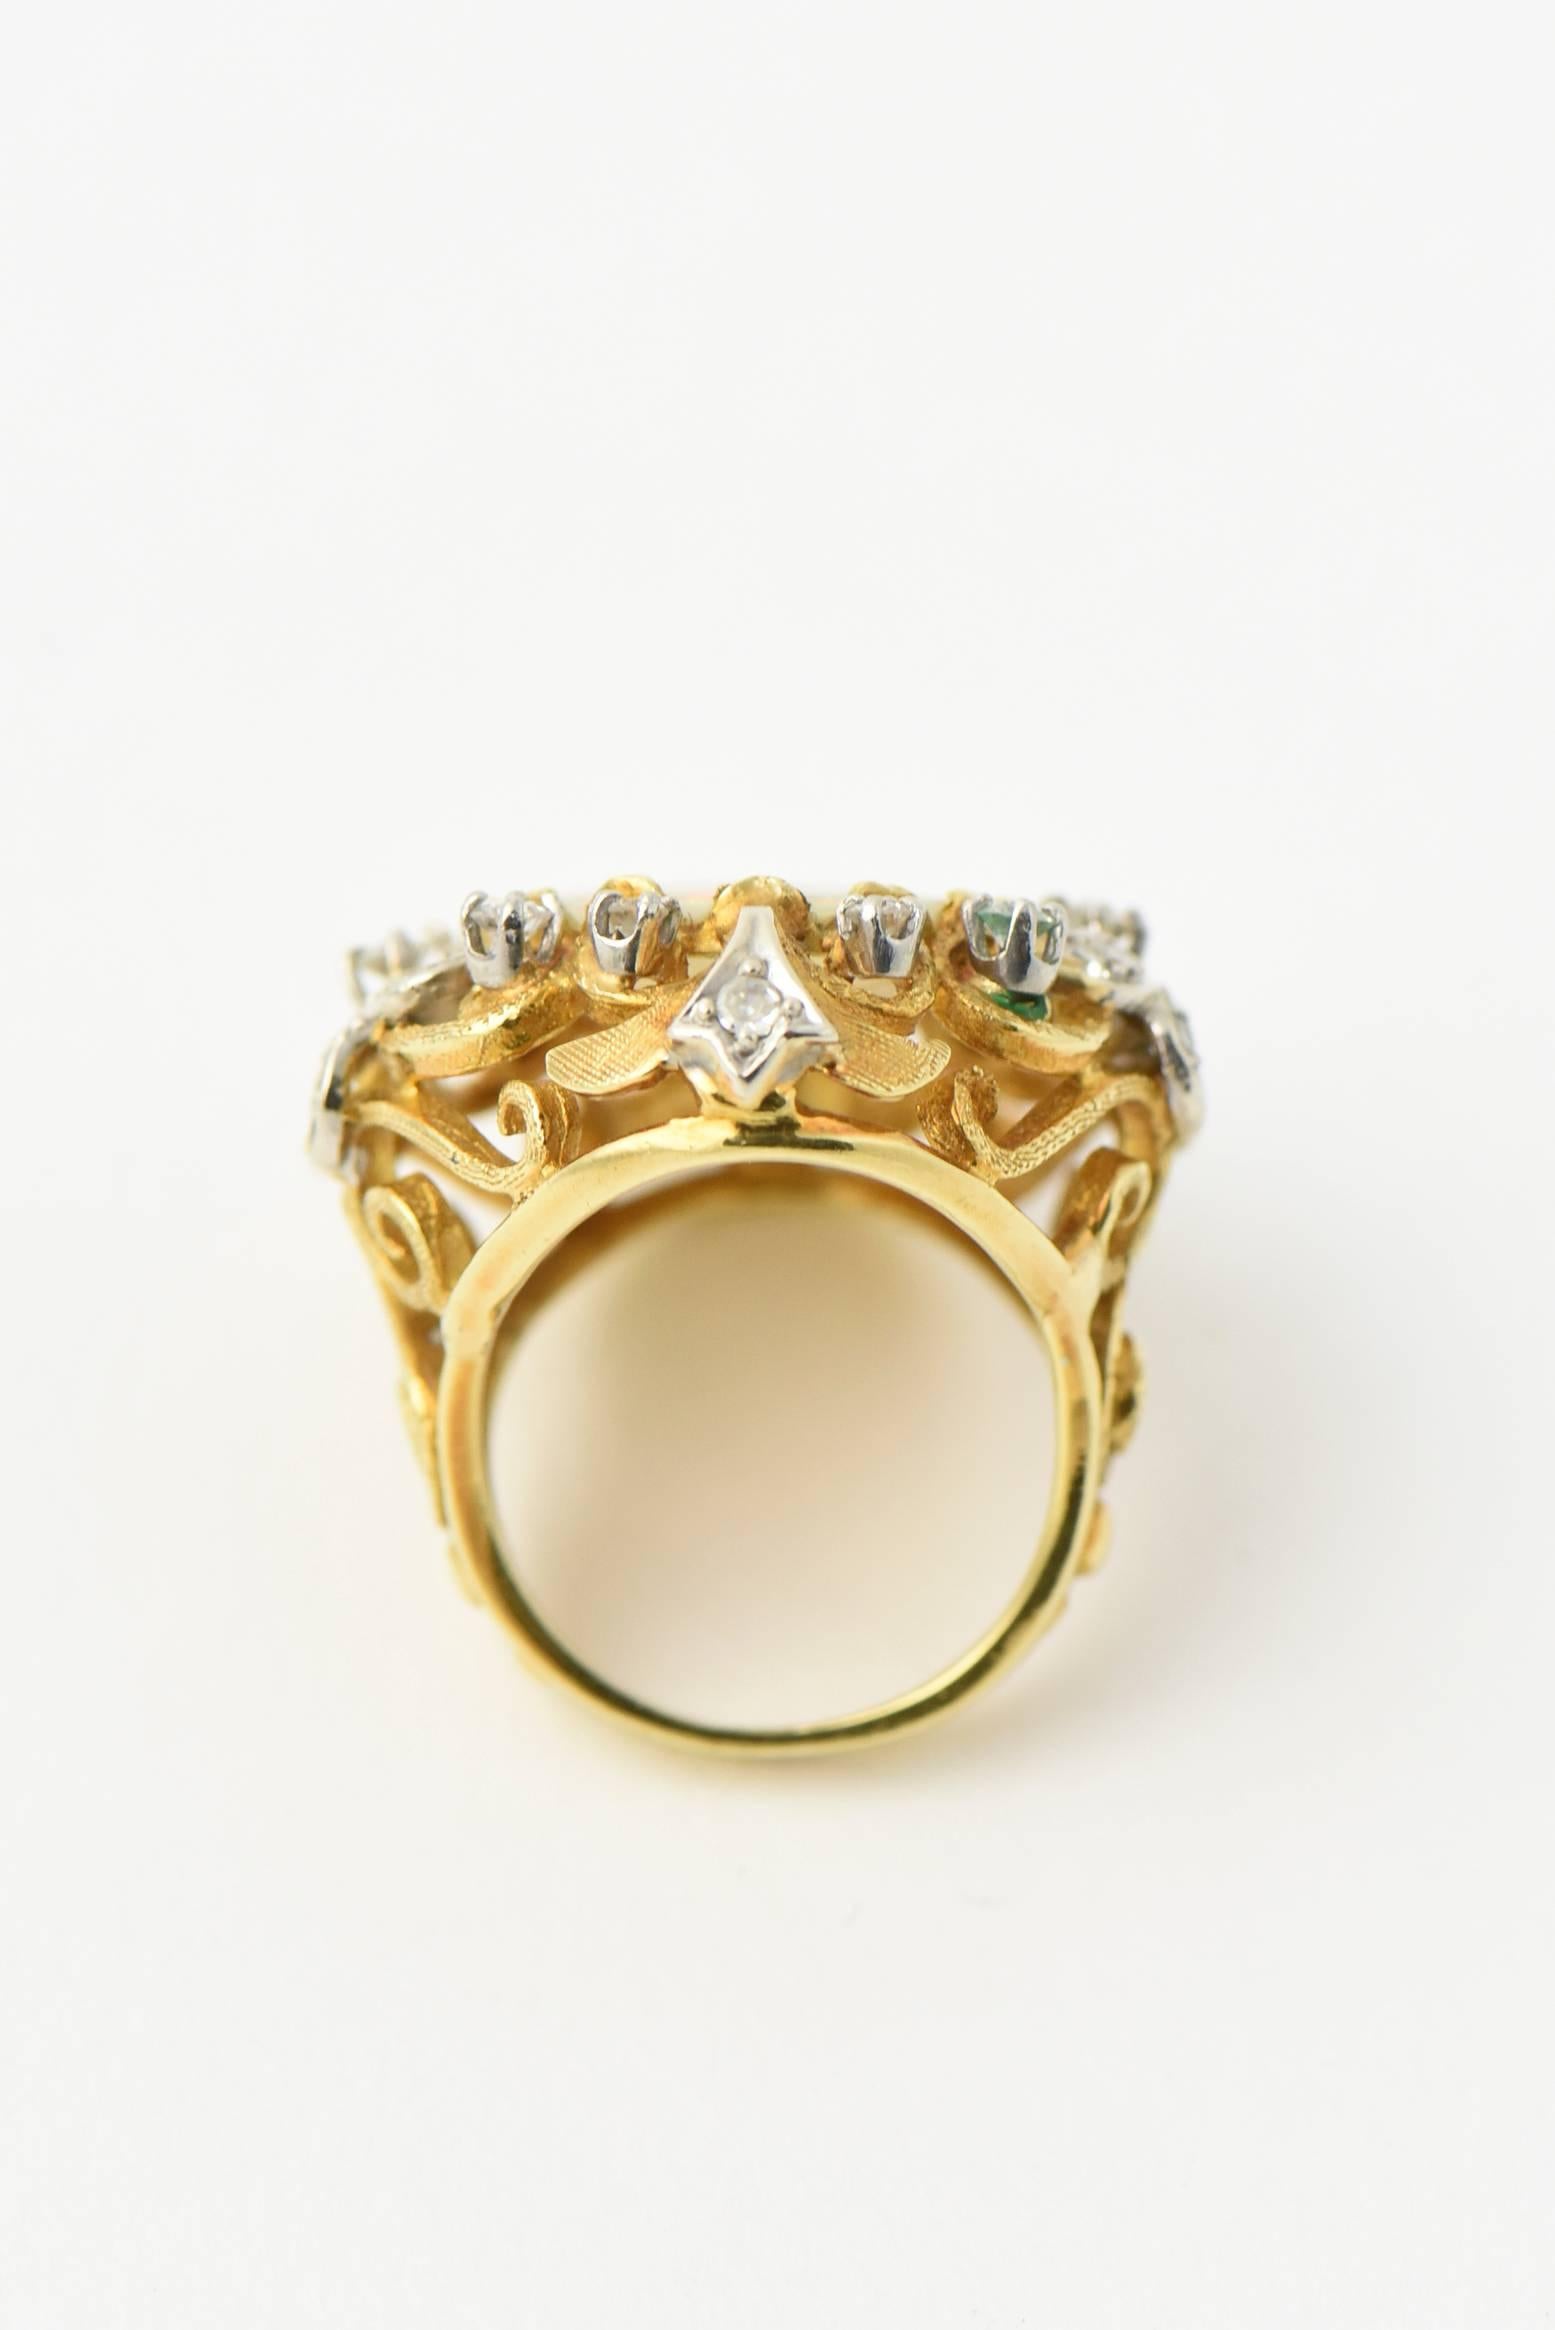 Women's Mid-20th Century Fine Australian Gray Opal Diamond Gold Cocktail Statement Ring For Sale